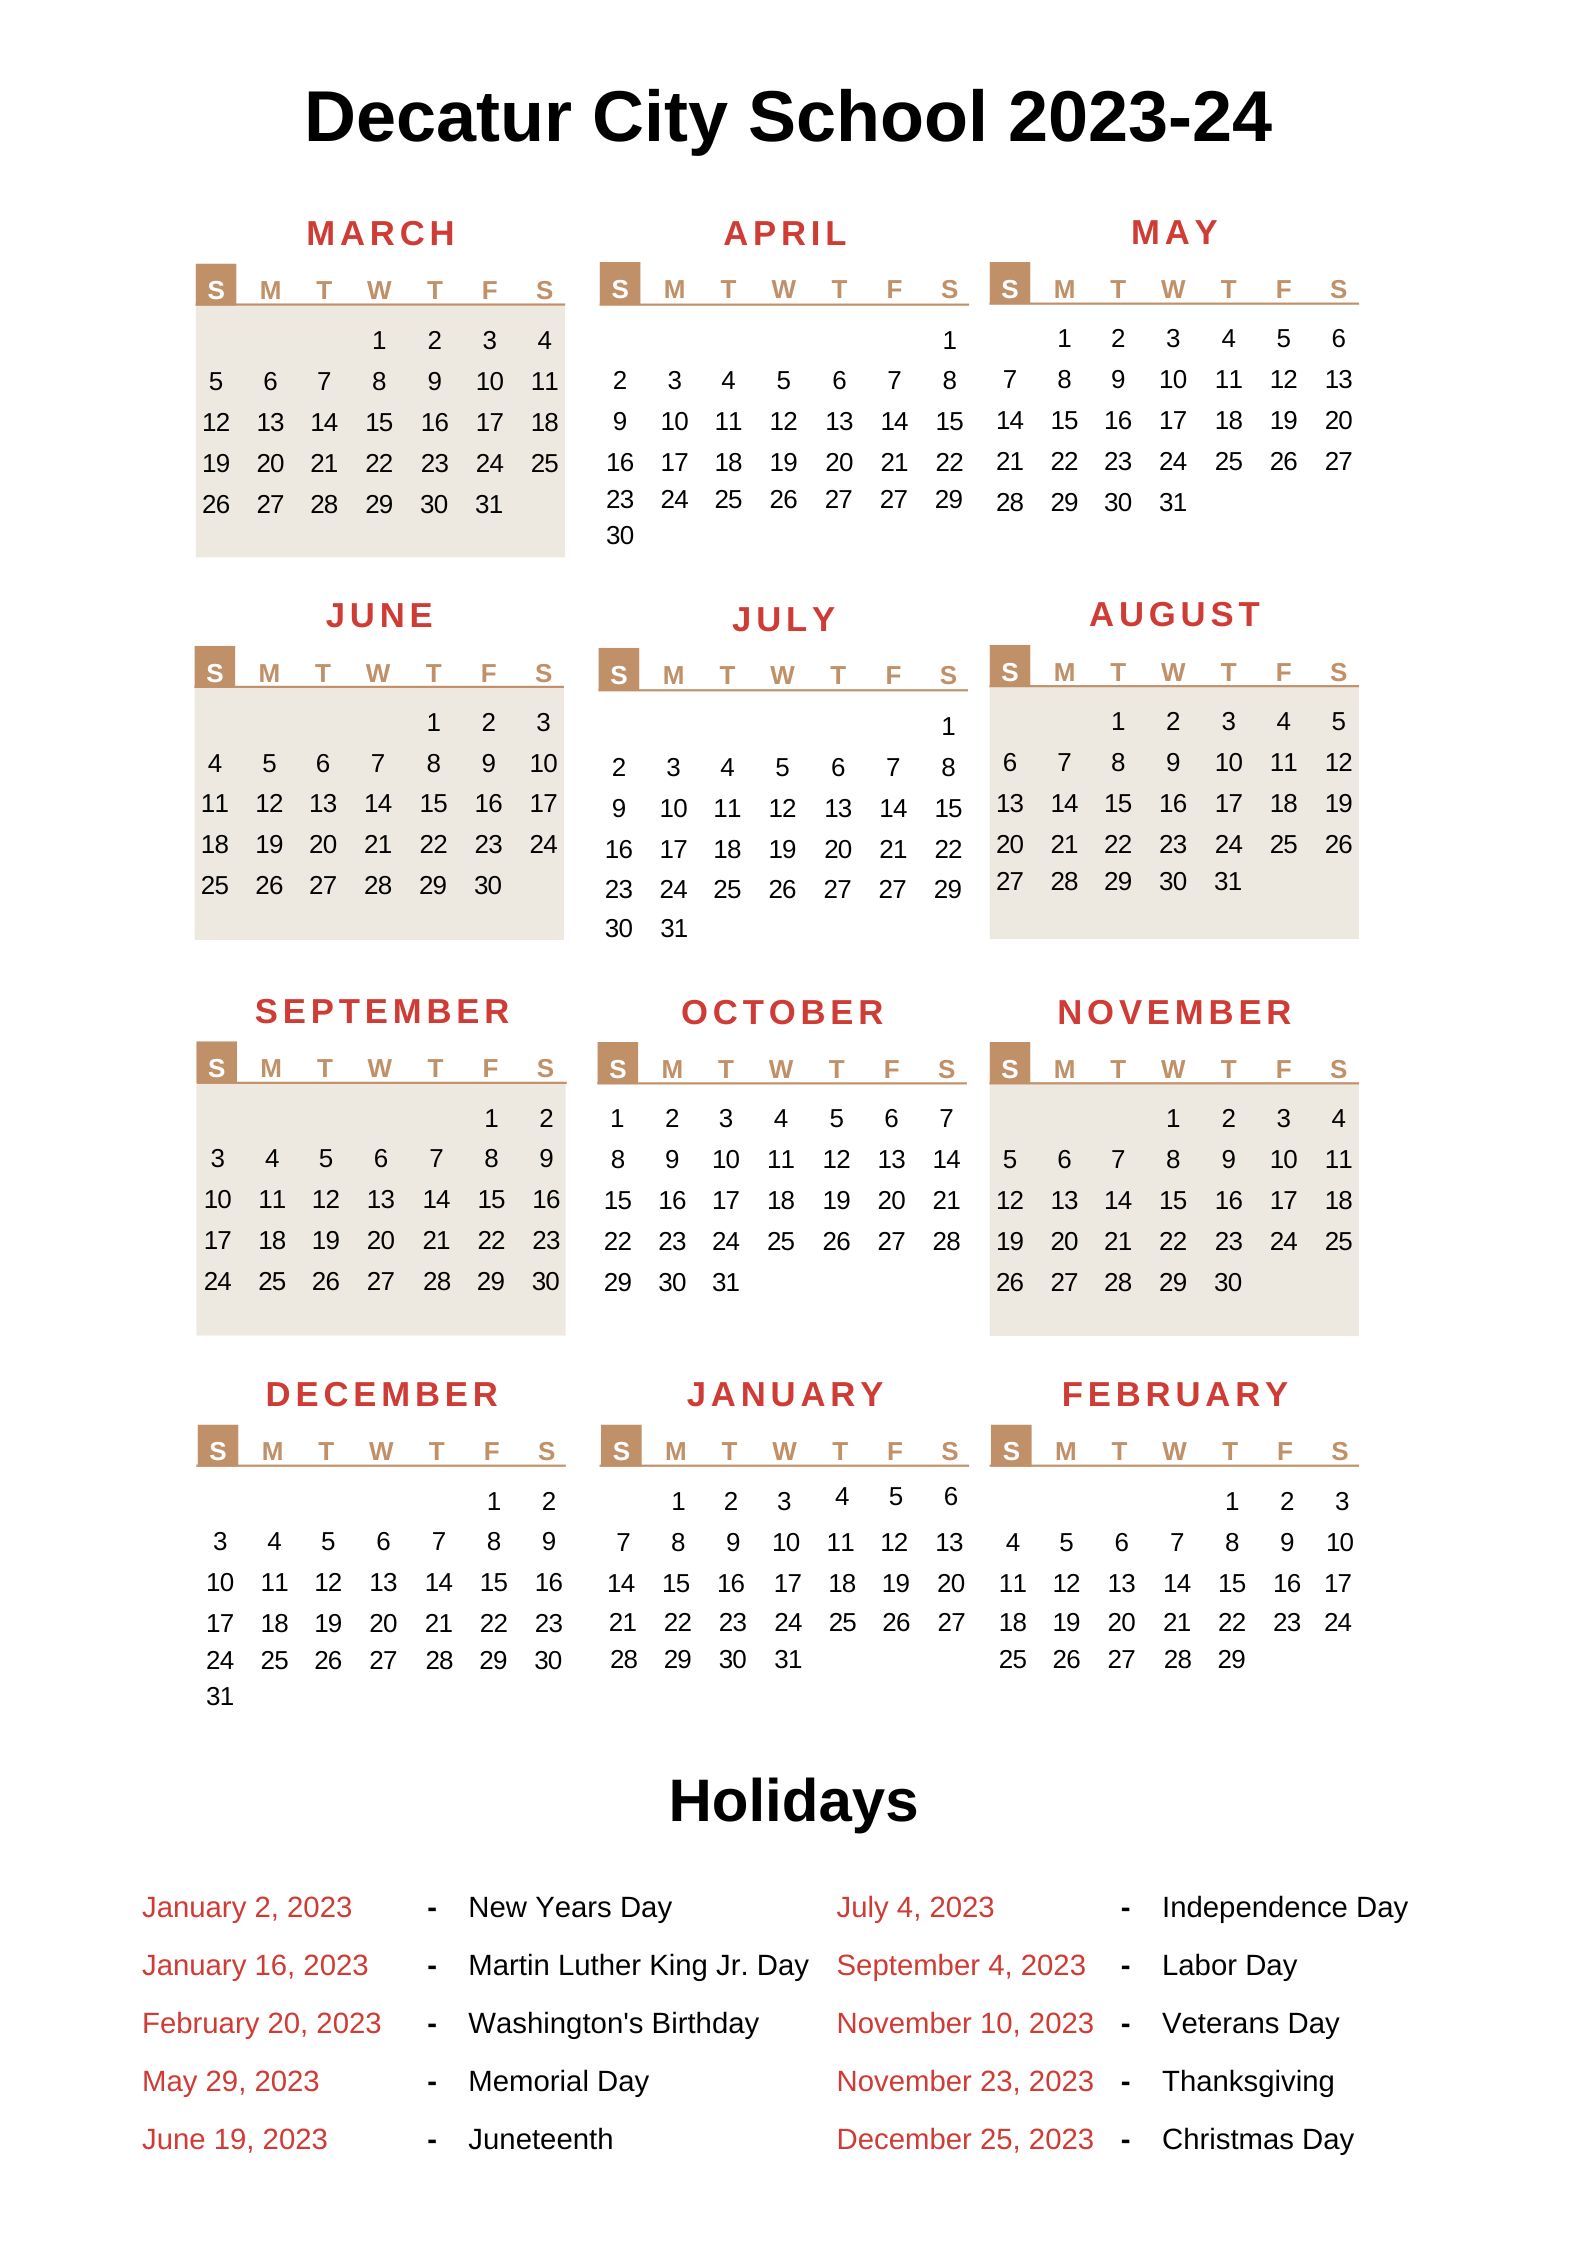 Decatur City Schools Calendar 2023 24 With Holidays